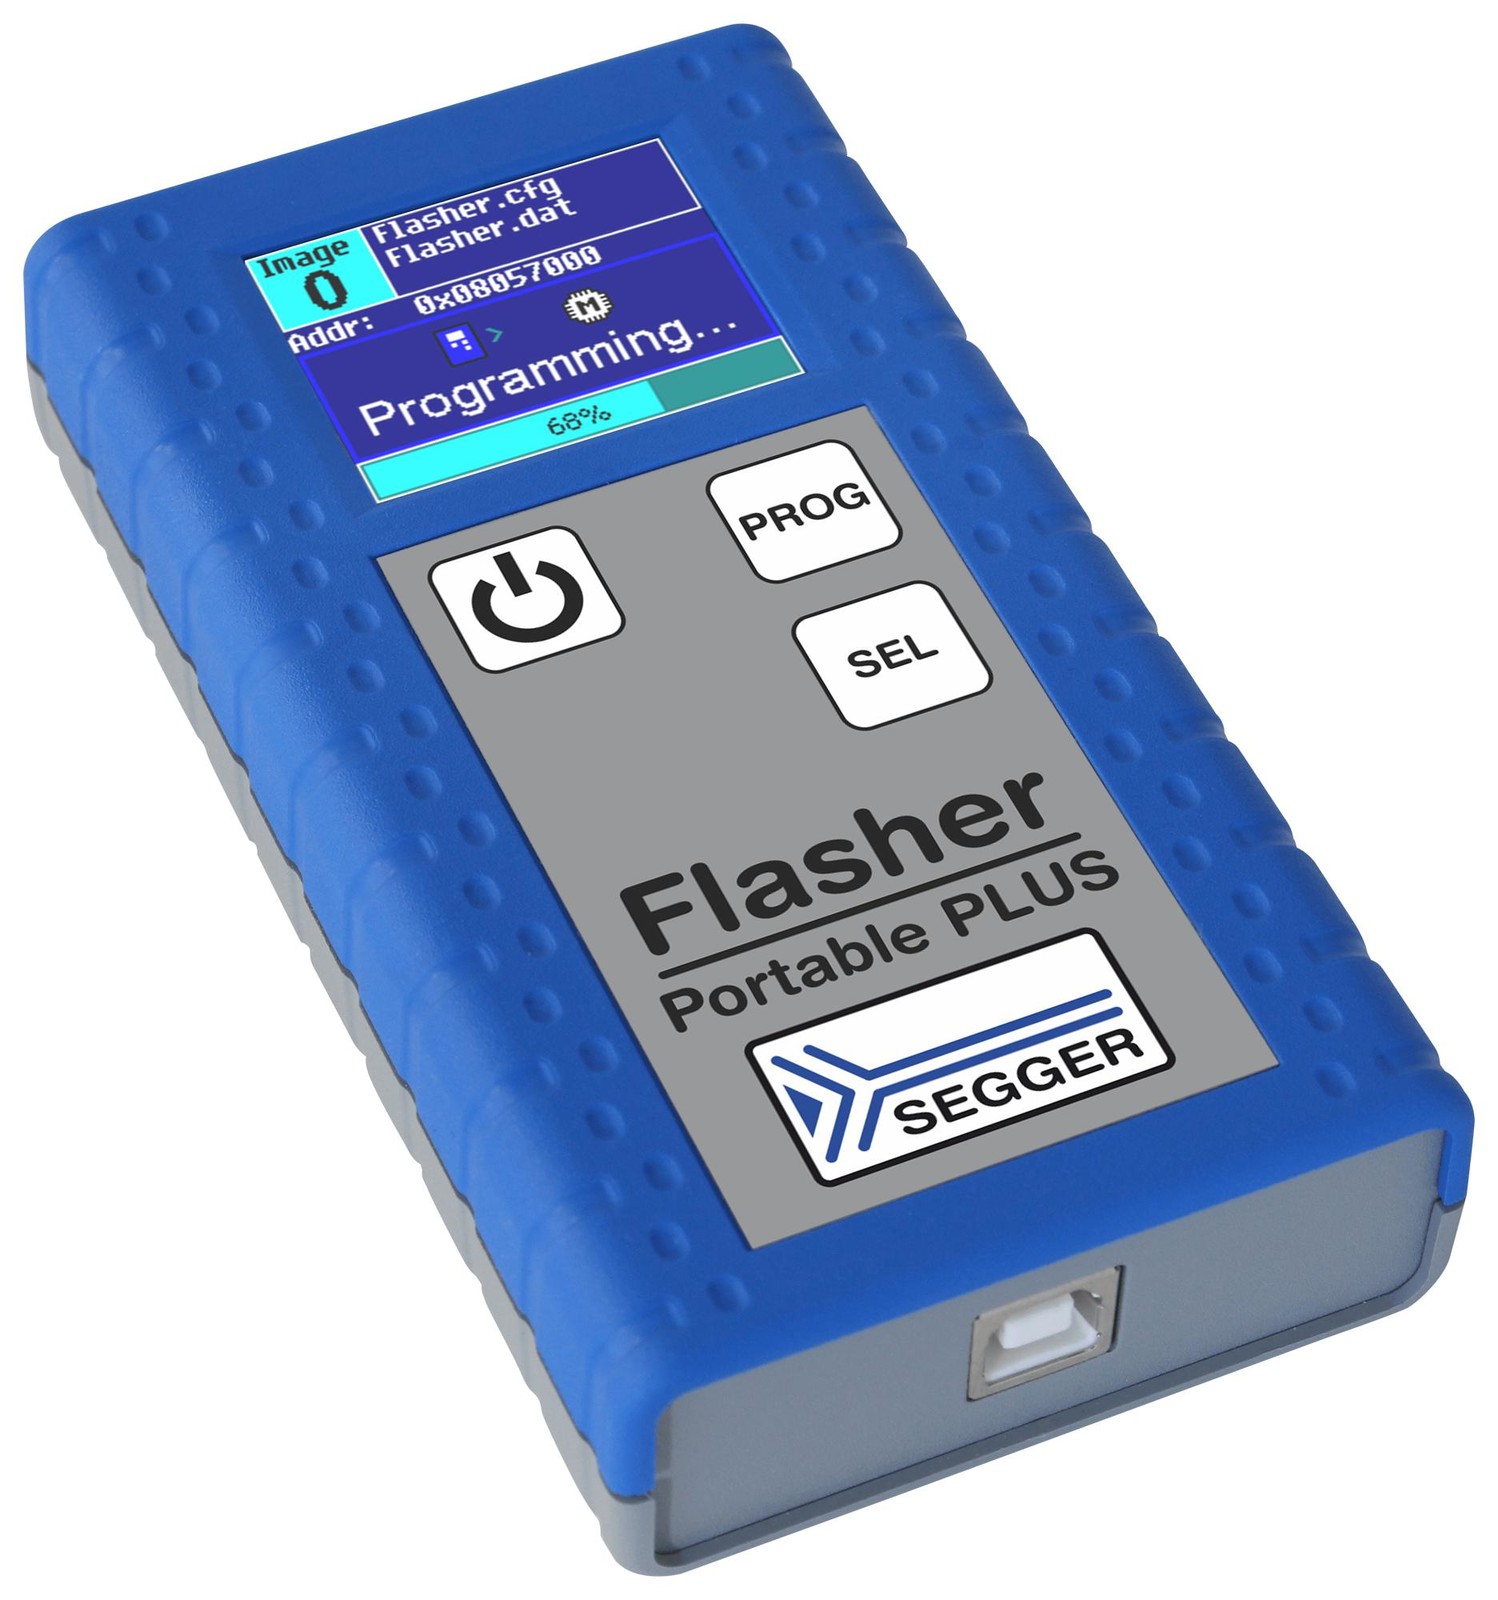 Segger 5.16.02 Flasher Portable Plus Portable Programming Tool, Mcu